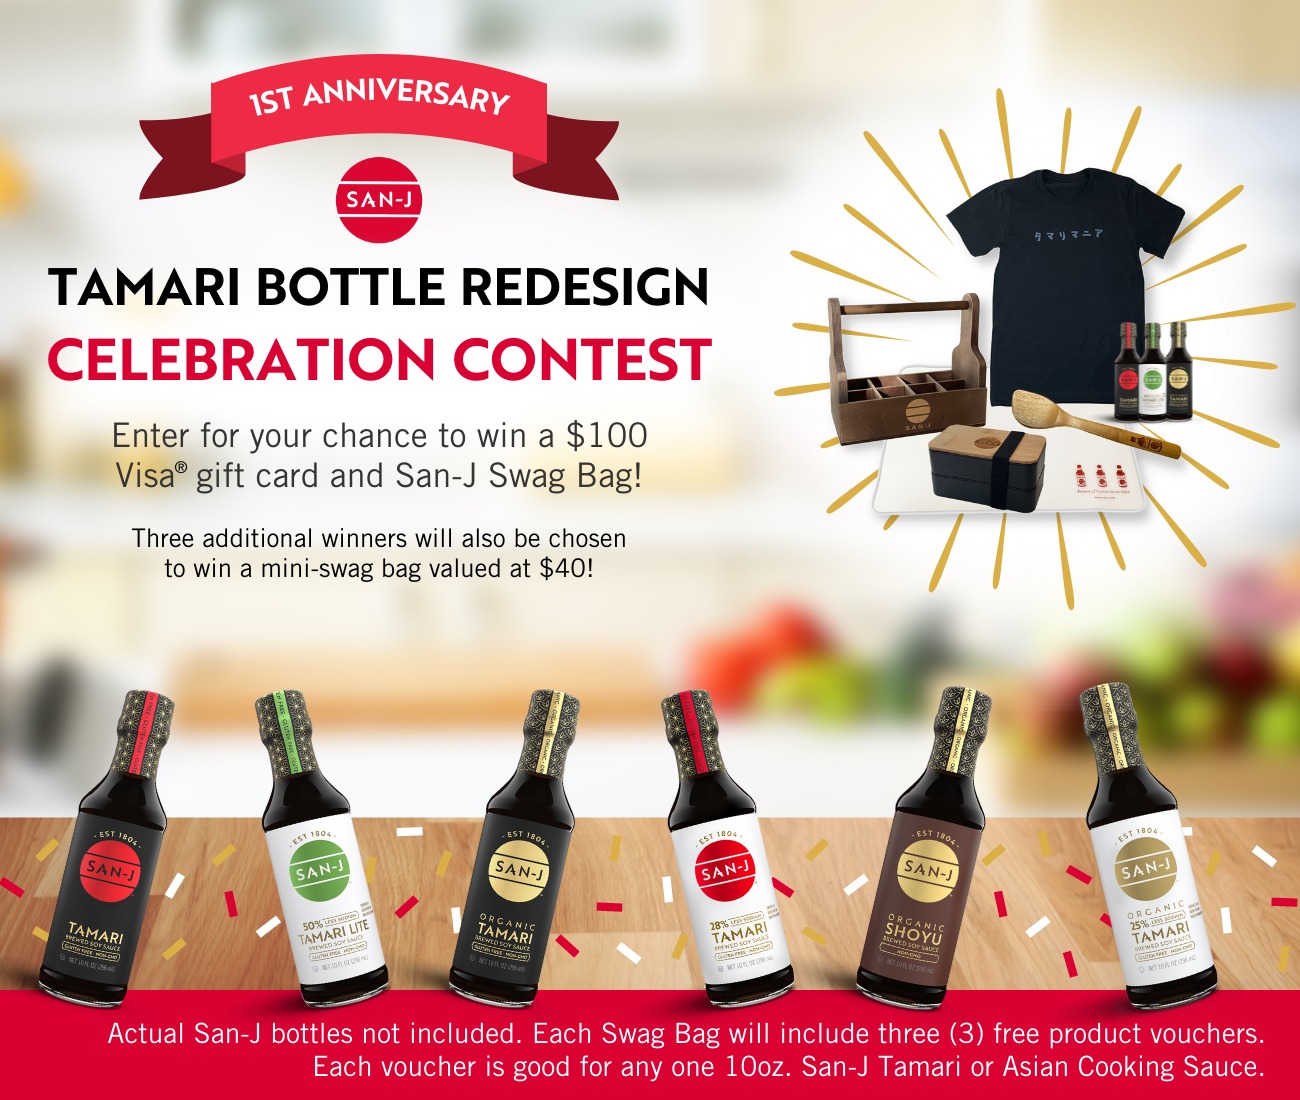 San-J Tamari Bottle Redesign Celebration Contest